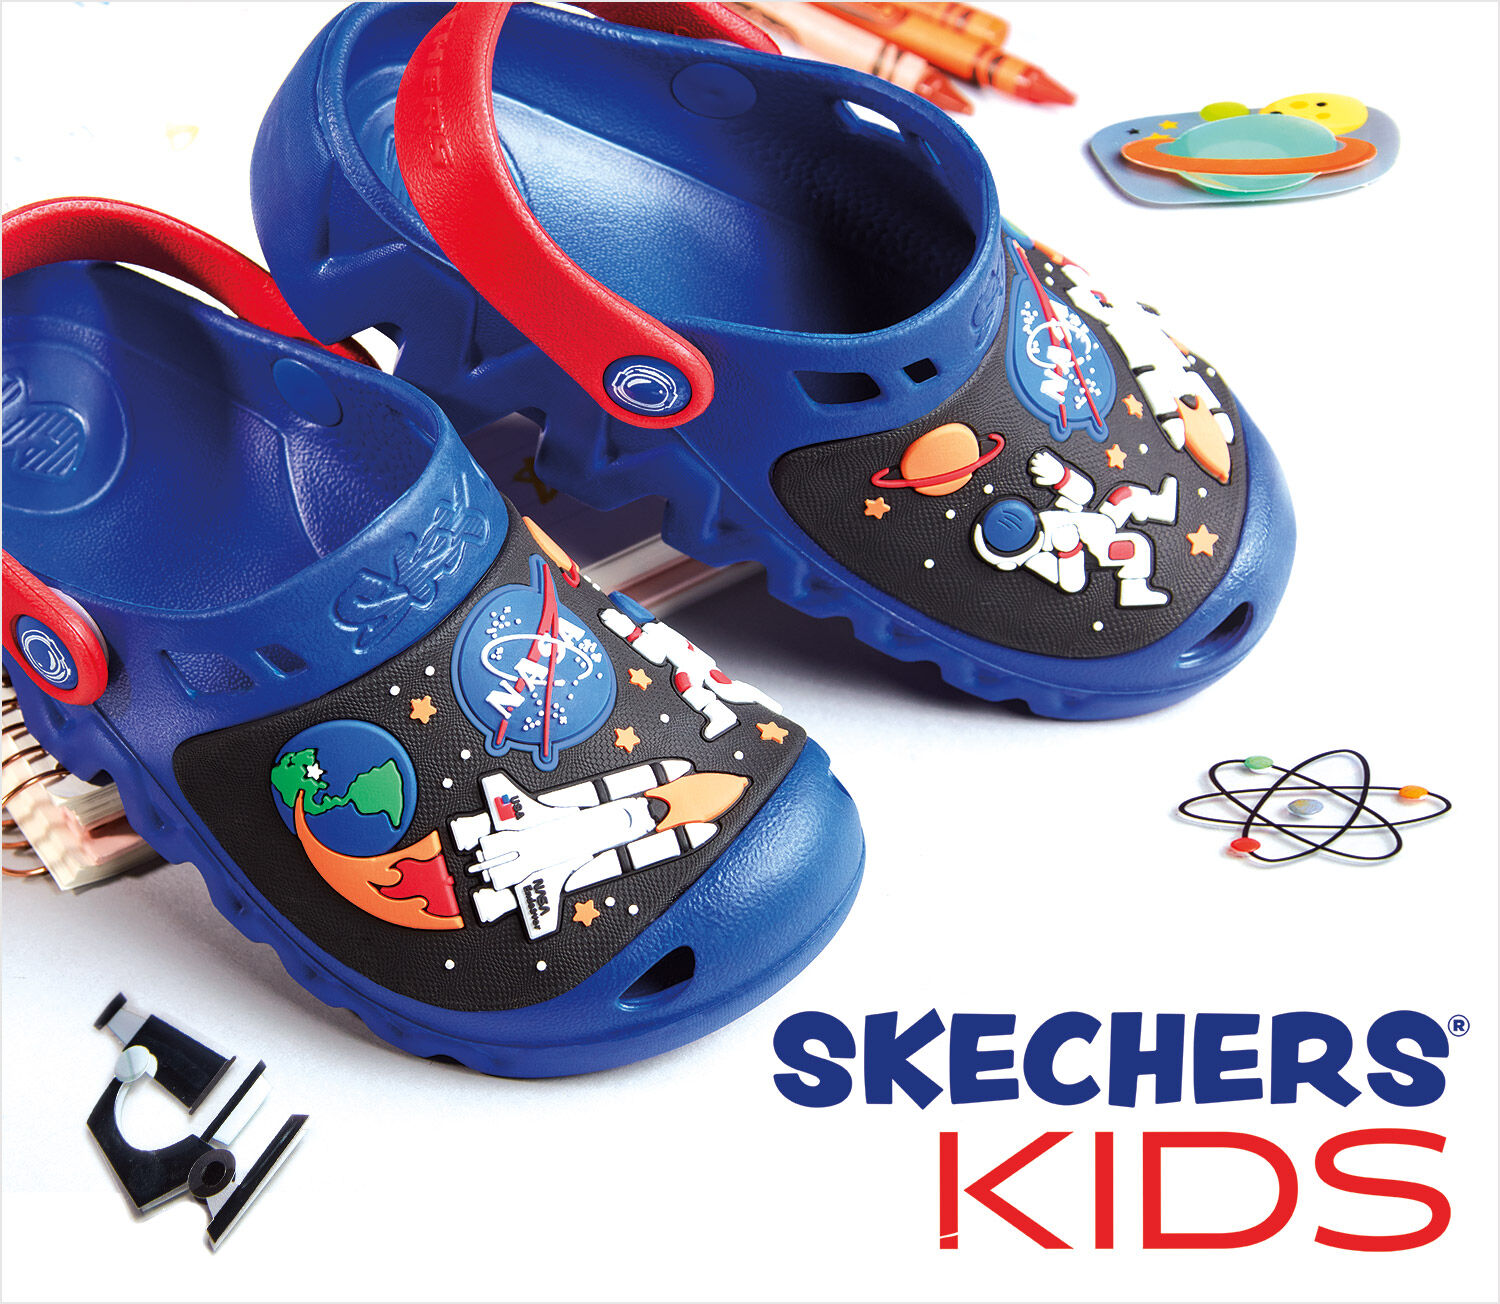 skechers v pout childrens shoes